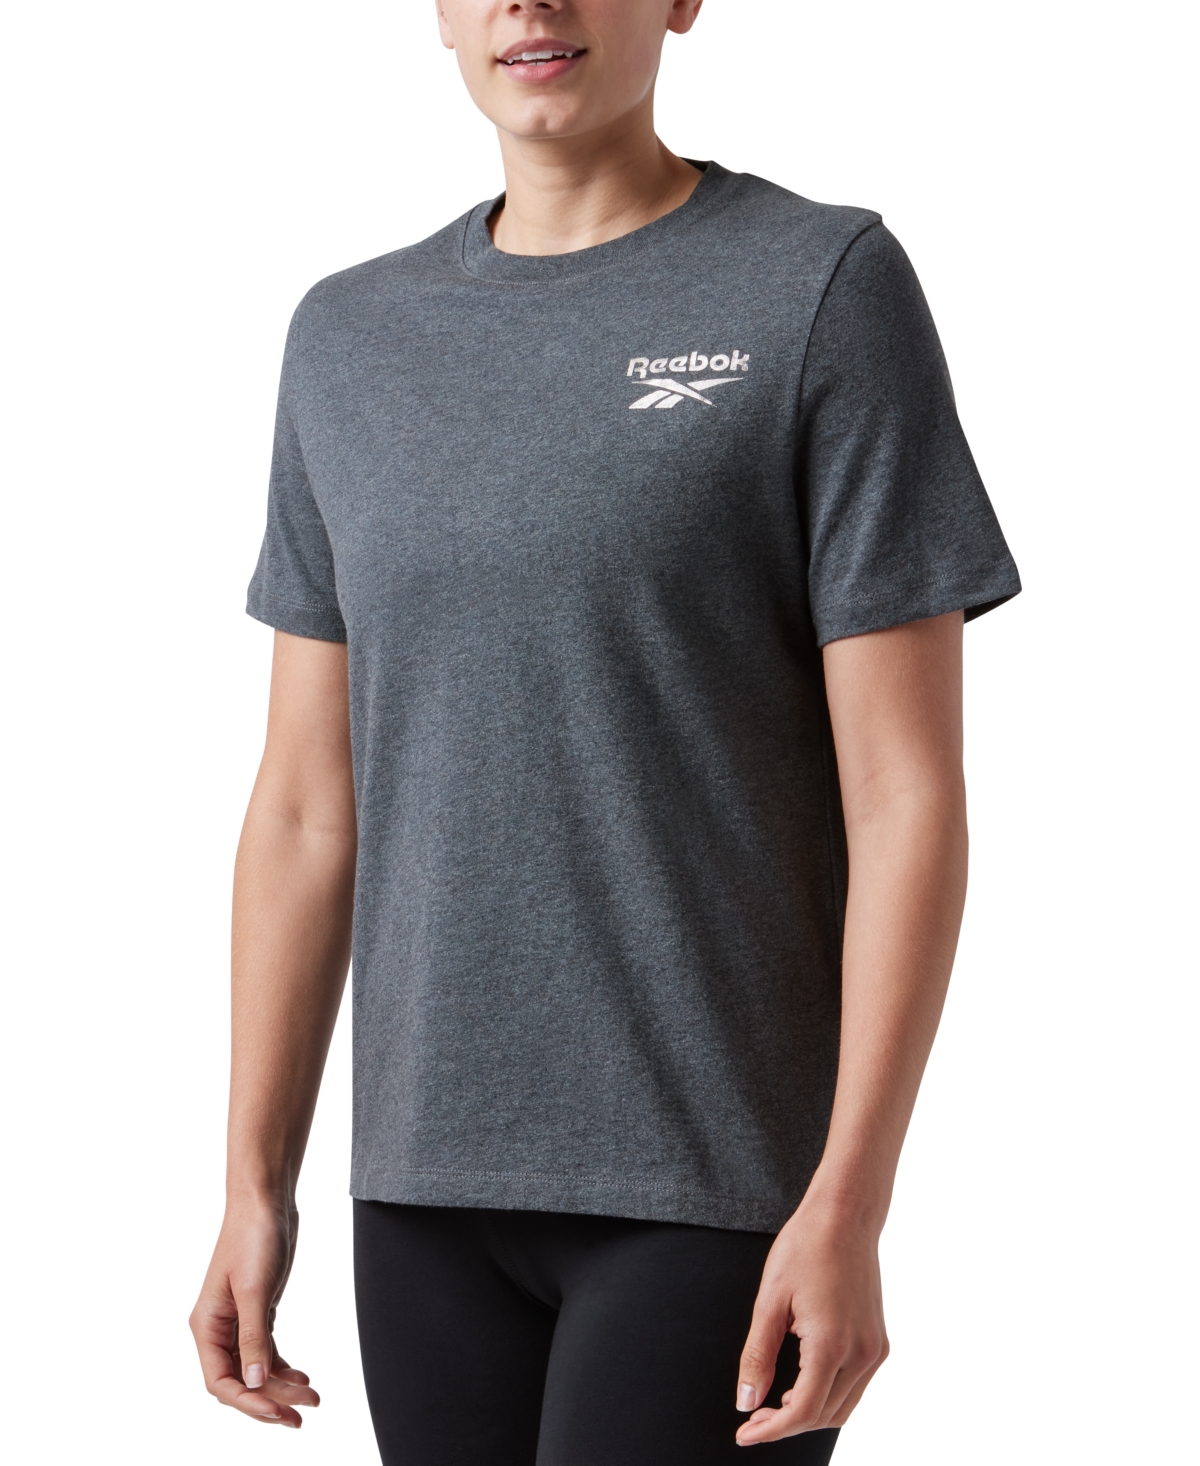 Reebok Women's Cotton Shine Logo T-shirt, Created For Macy's In Dark Grey Heather